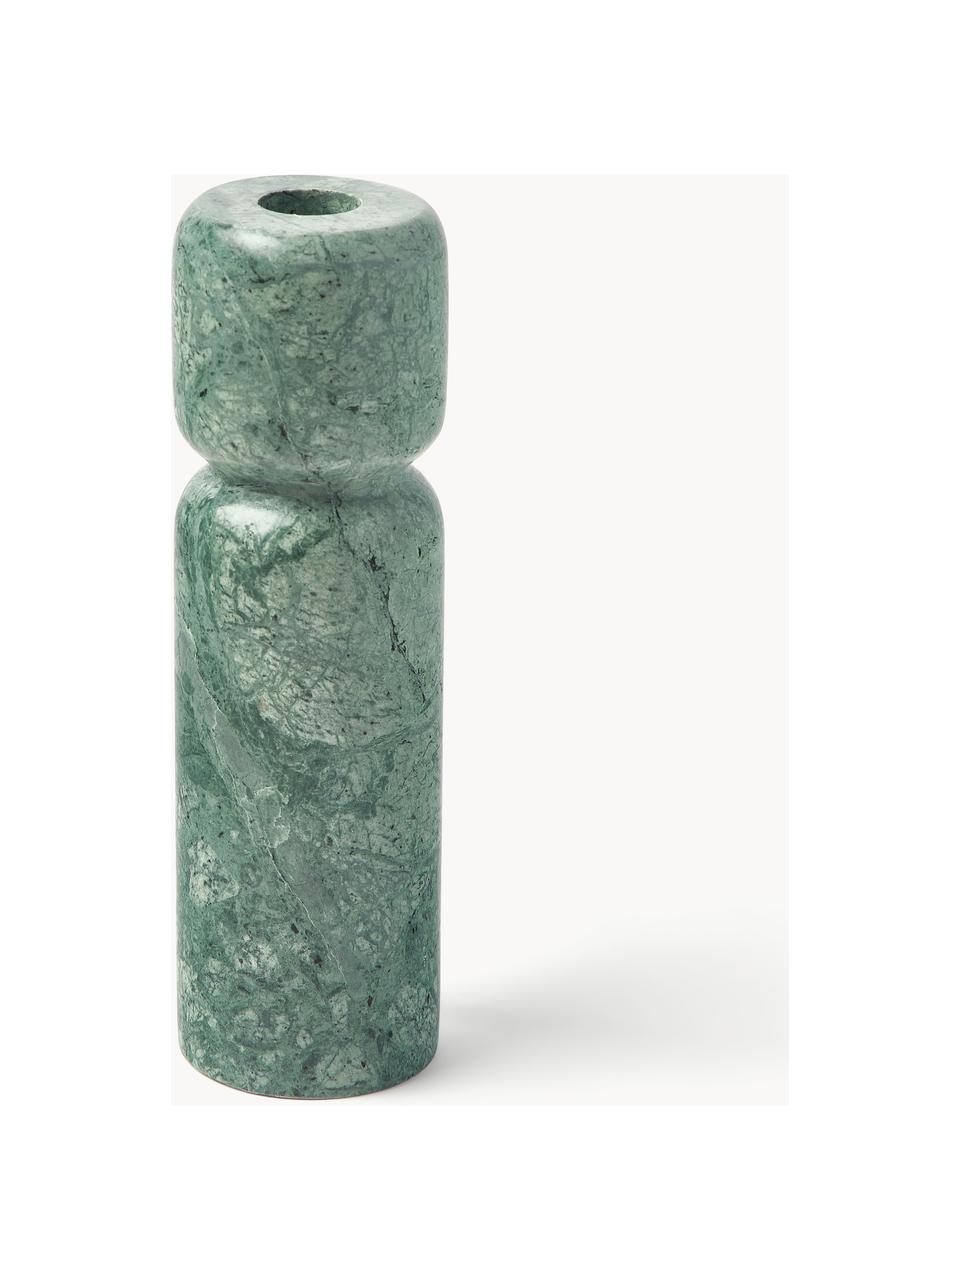 Kerzenhalter-Set Como aus grünem Marmor, 2er-Set, Marmor, Grün, marmoriert, Set mit verschiedenen Größen